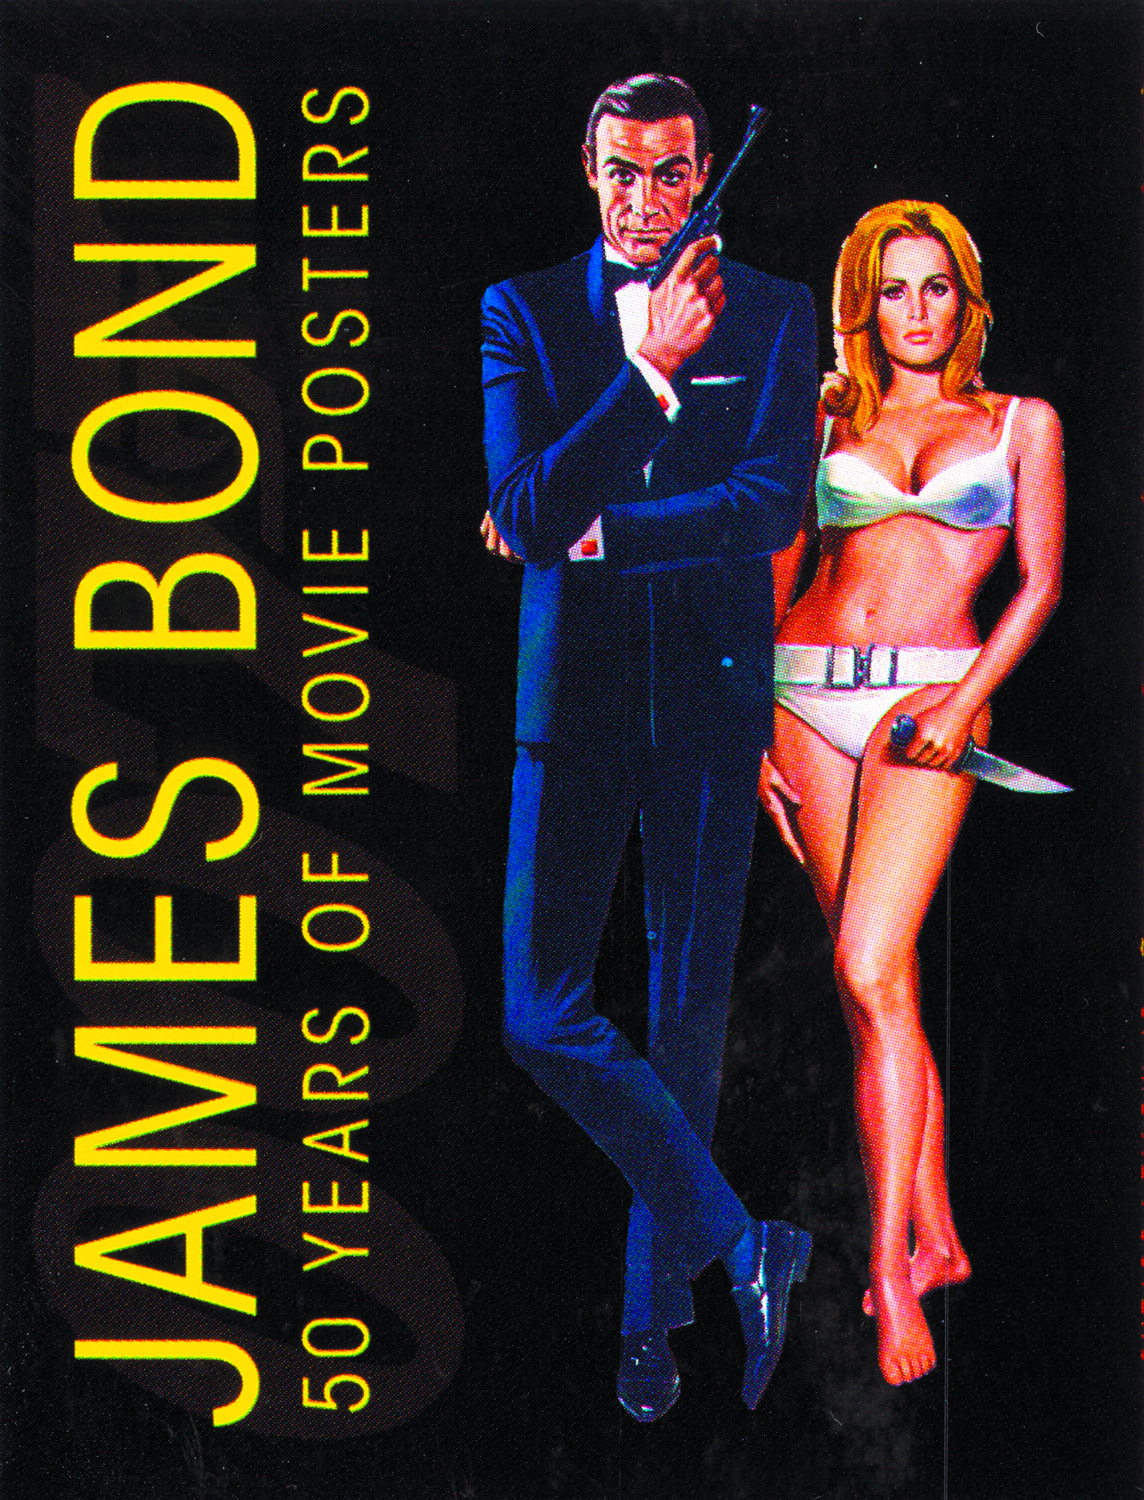 James bond 50 years of movie posters torrent dalgoto lqtorento